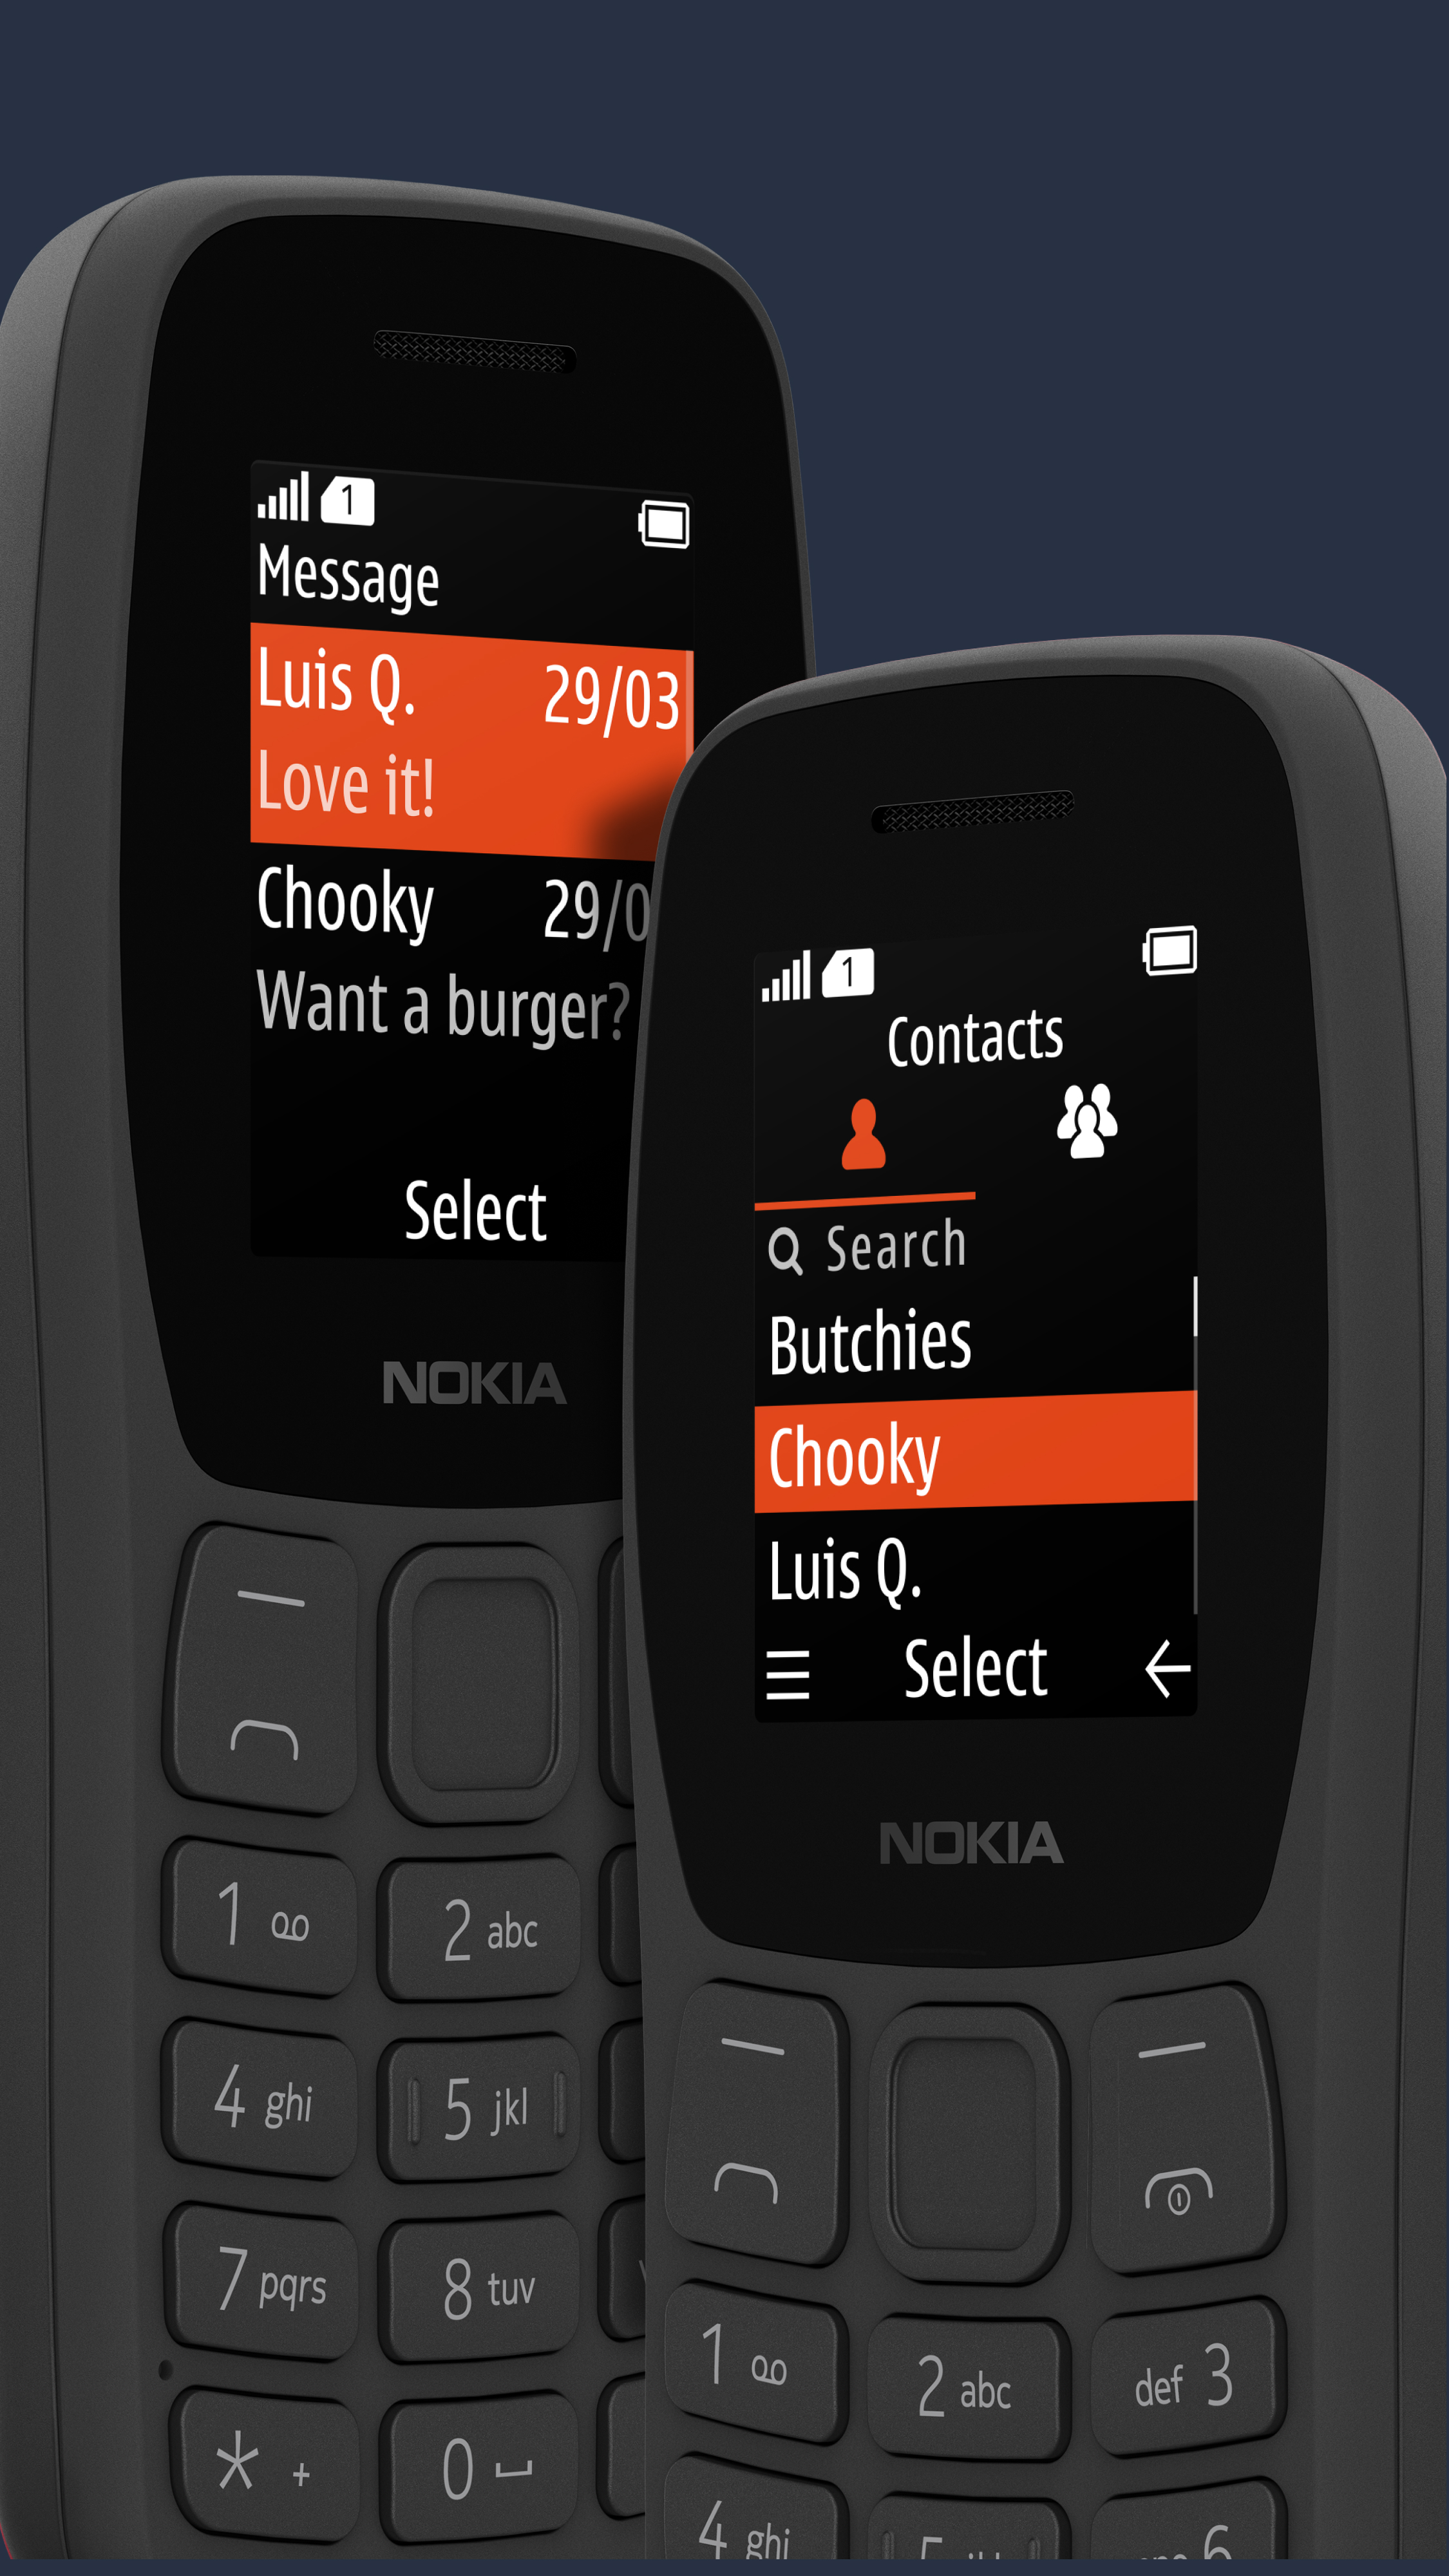 Nokia 105 Phone User Guide